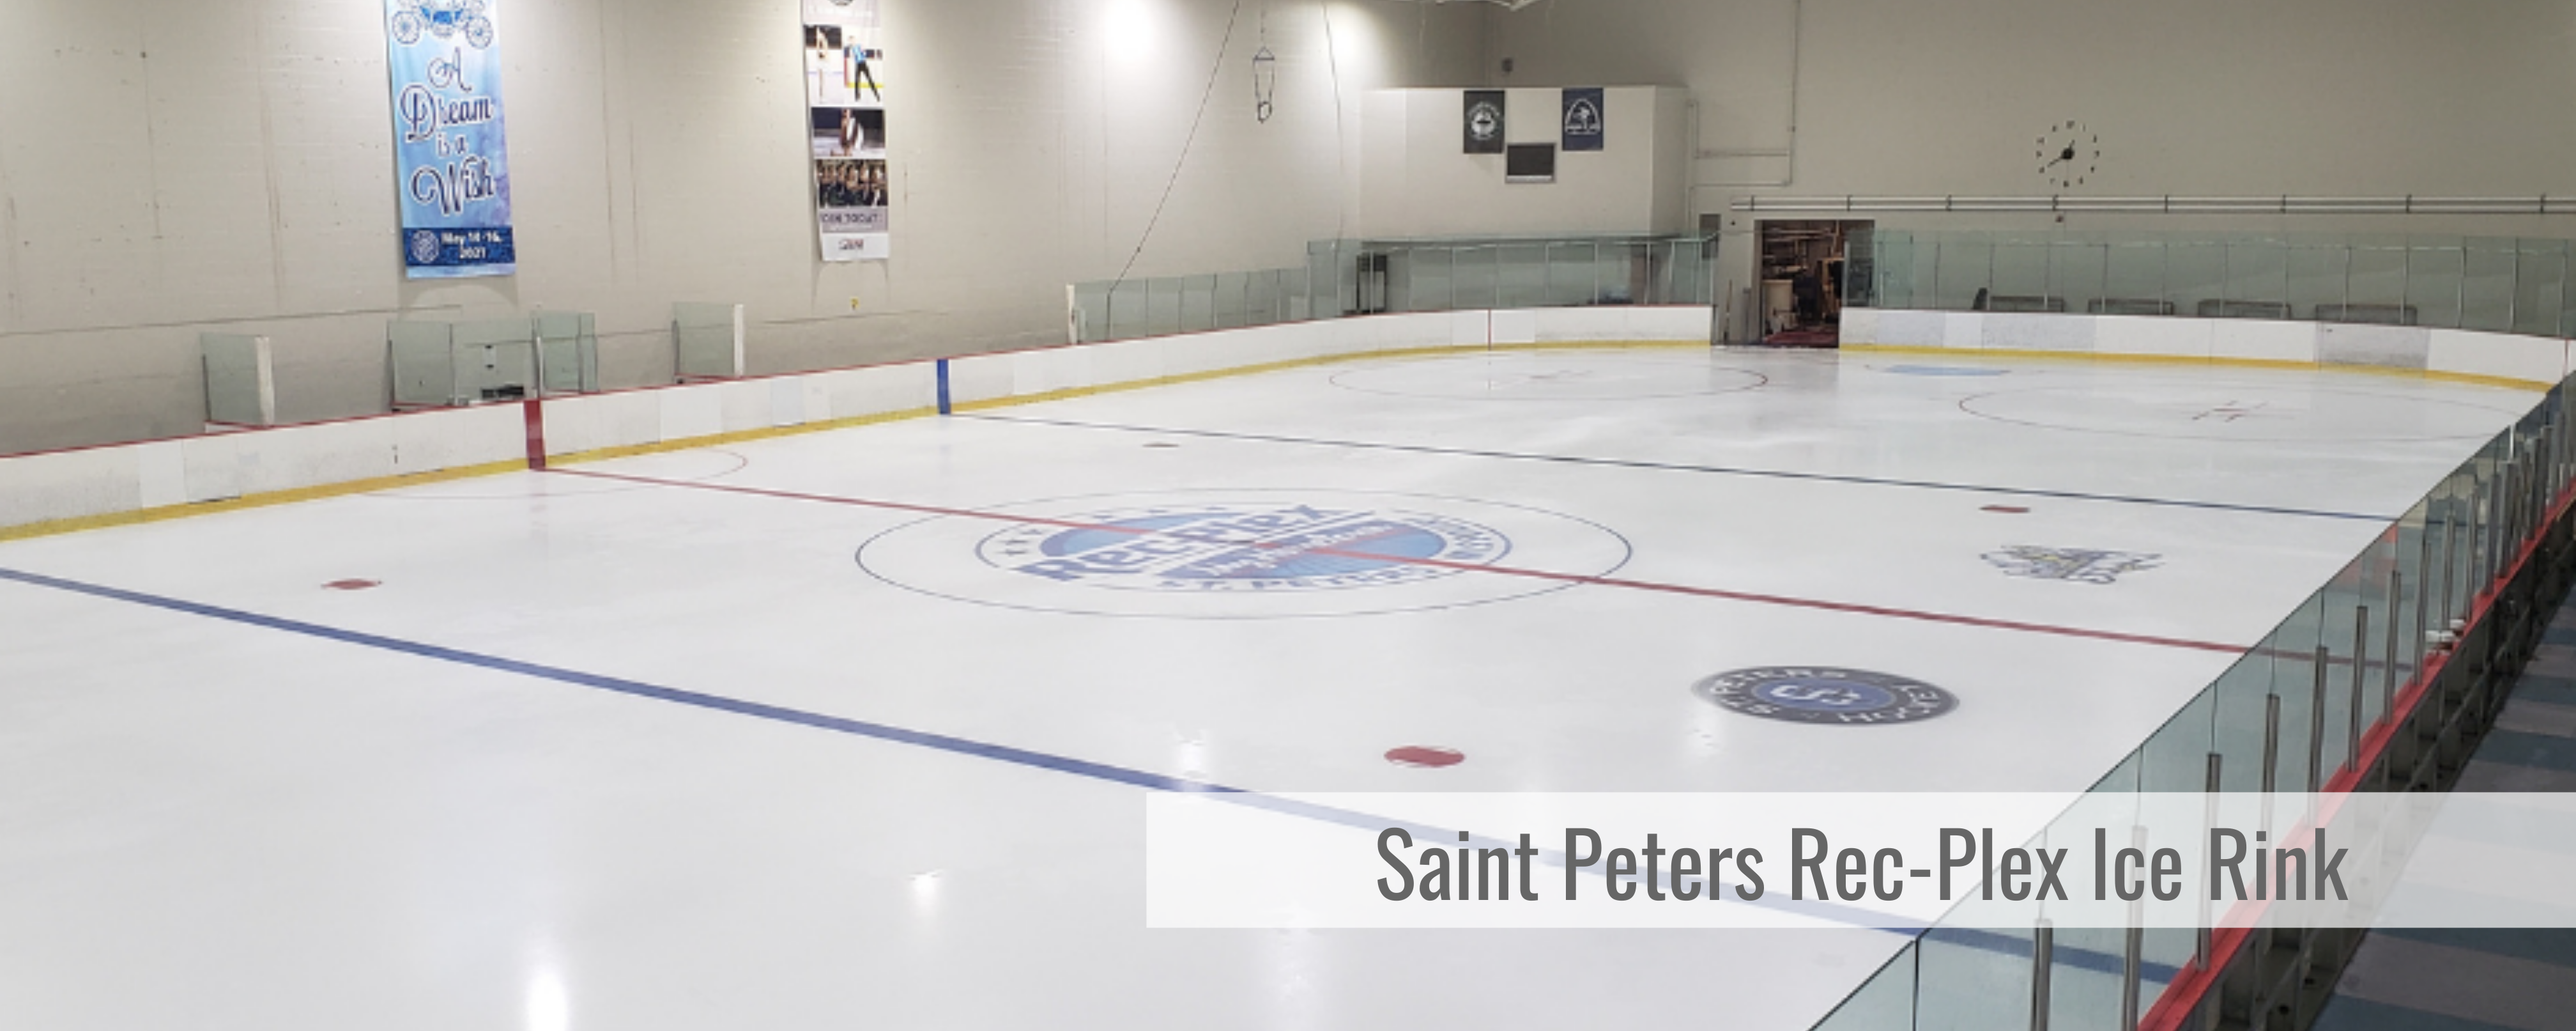 St Peters Rec Plex Ice Rink